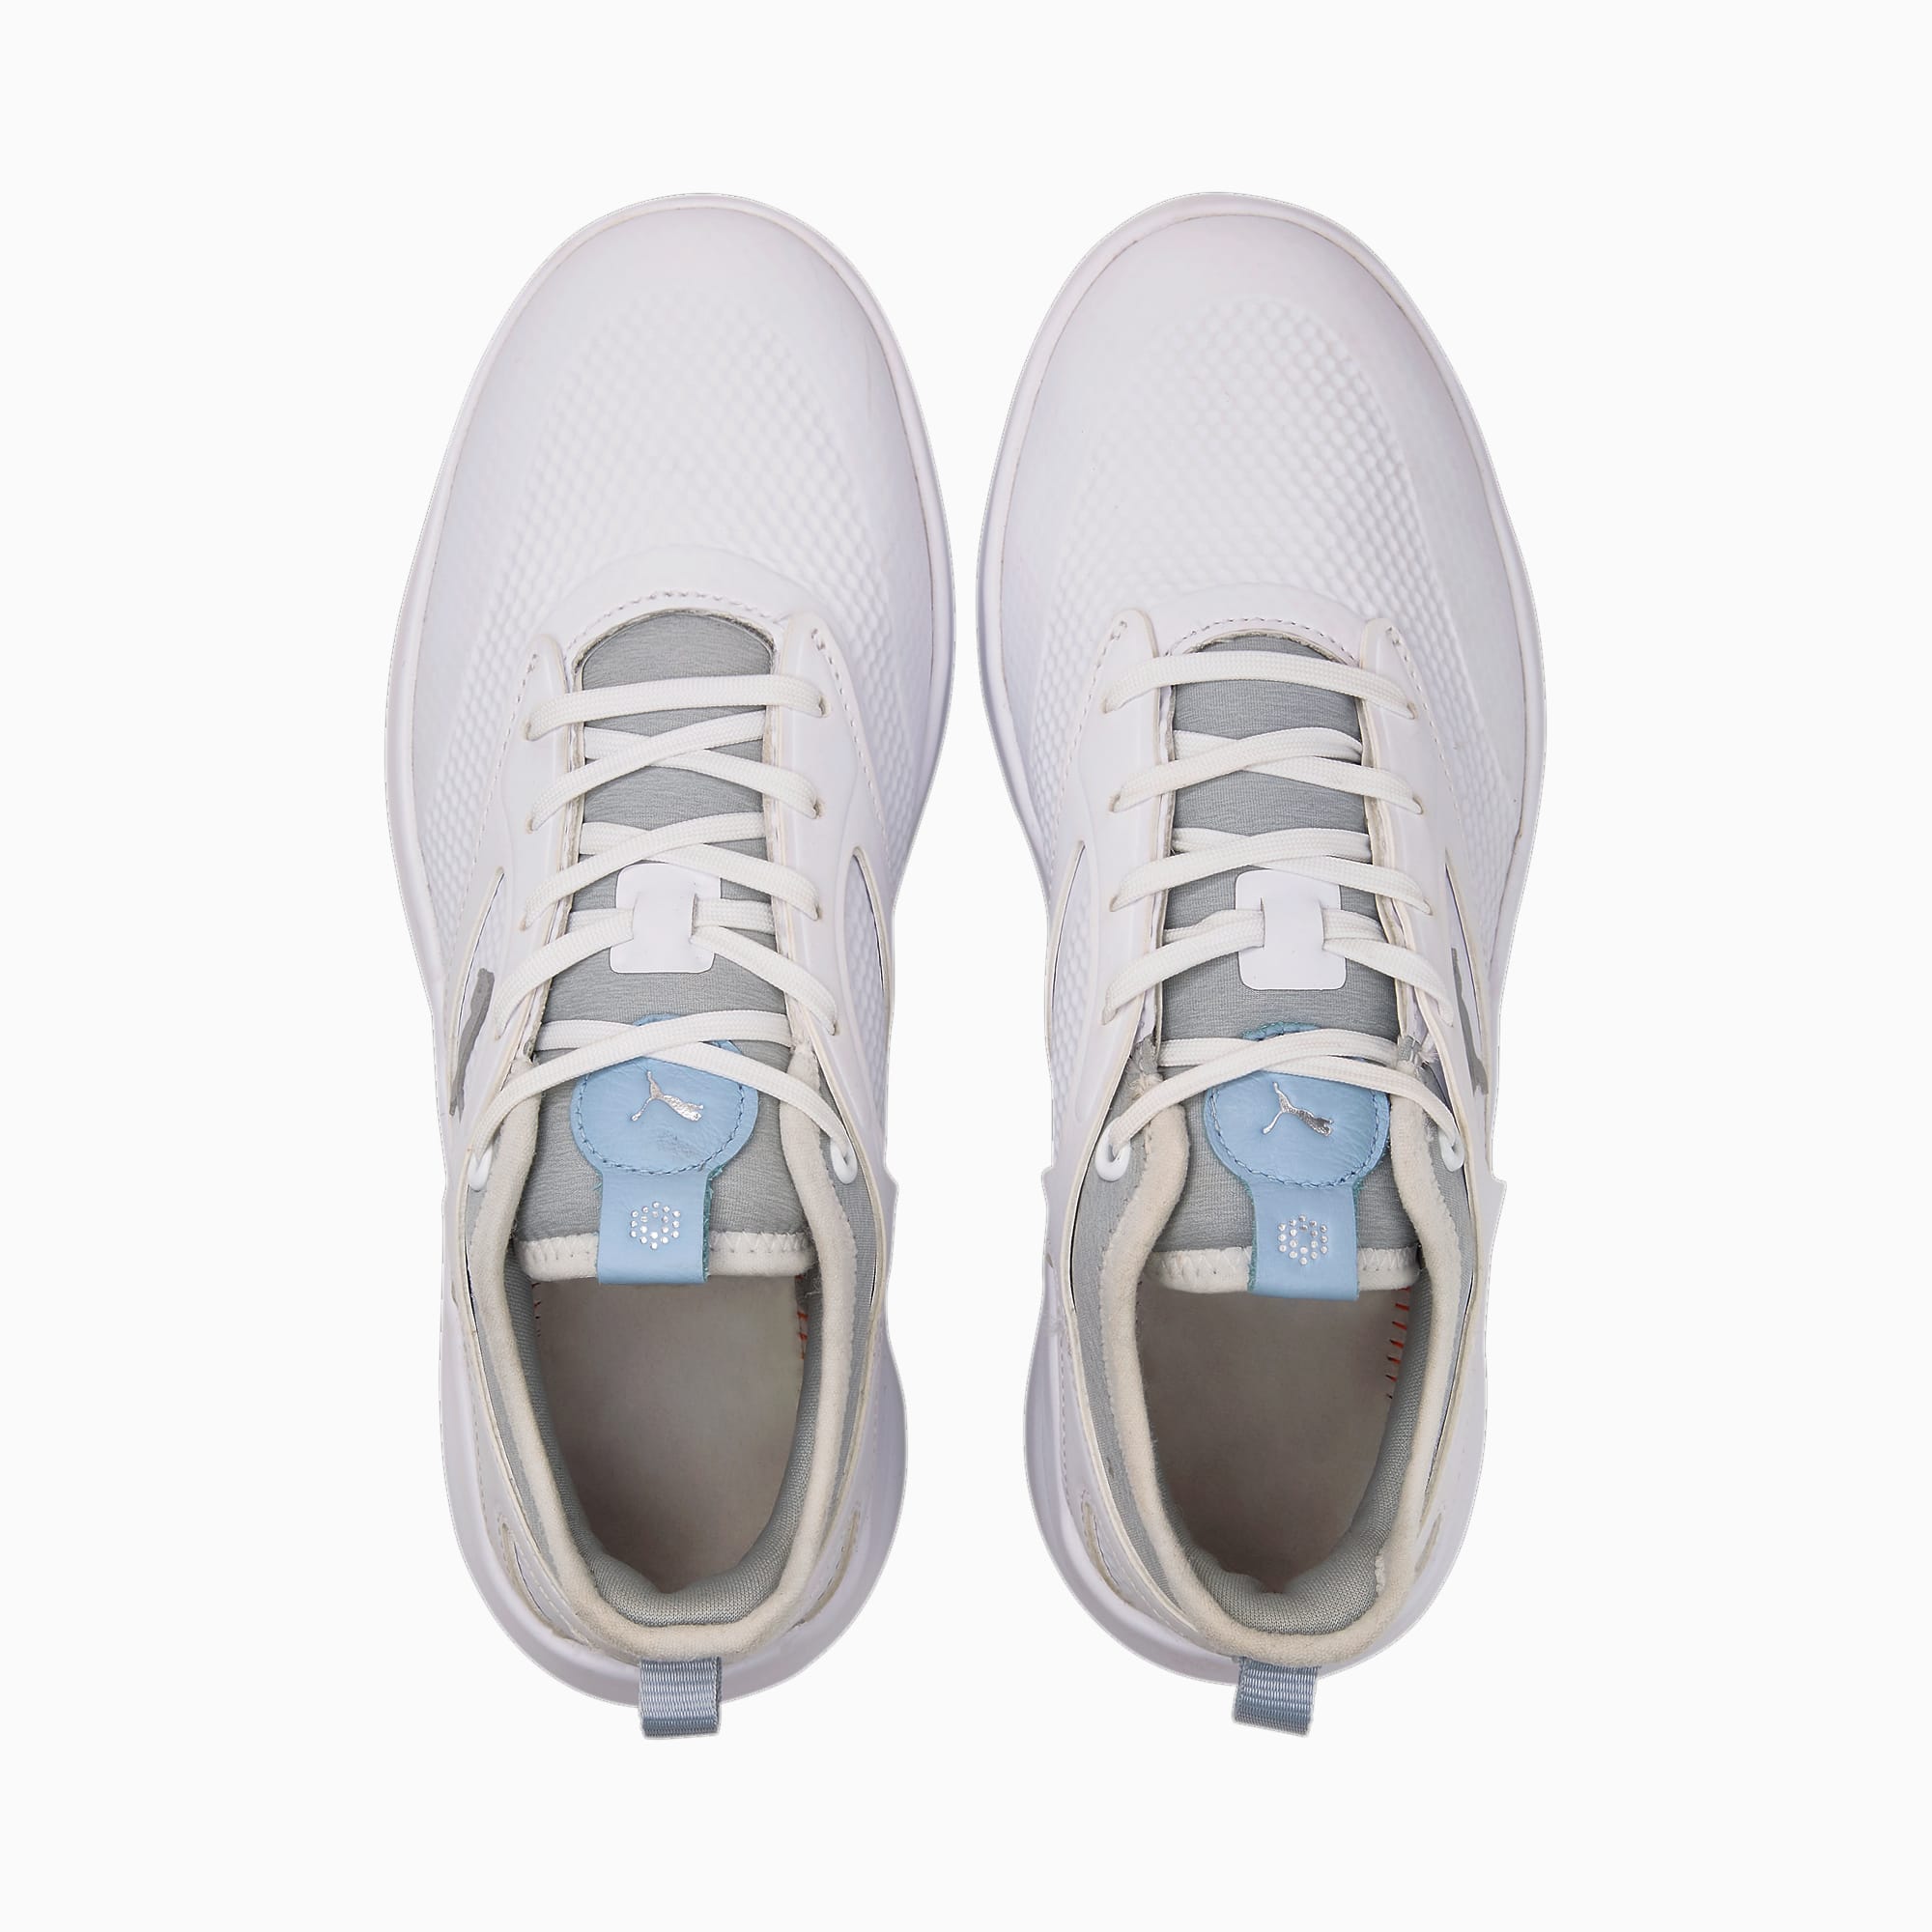 PUMA Ignite Malibu Golf Shoes Women, White/Silver/Lucite, Size 35,5, Shoes